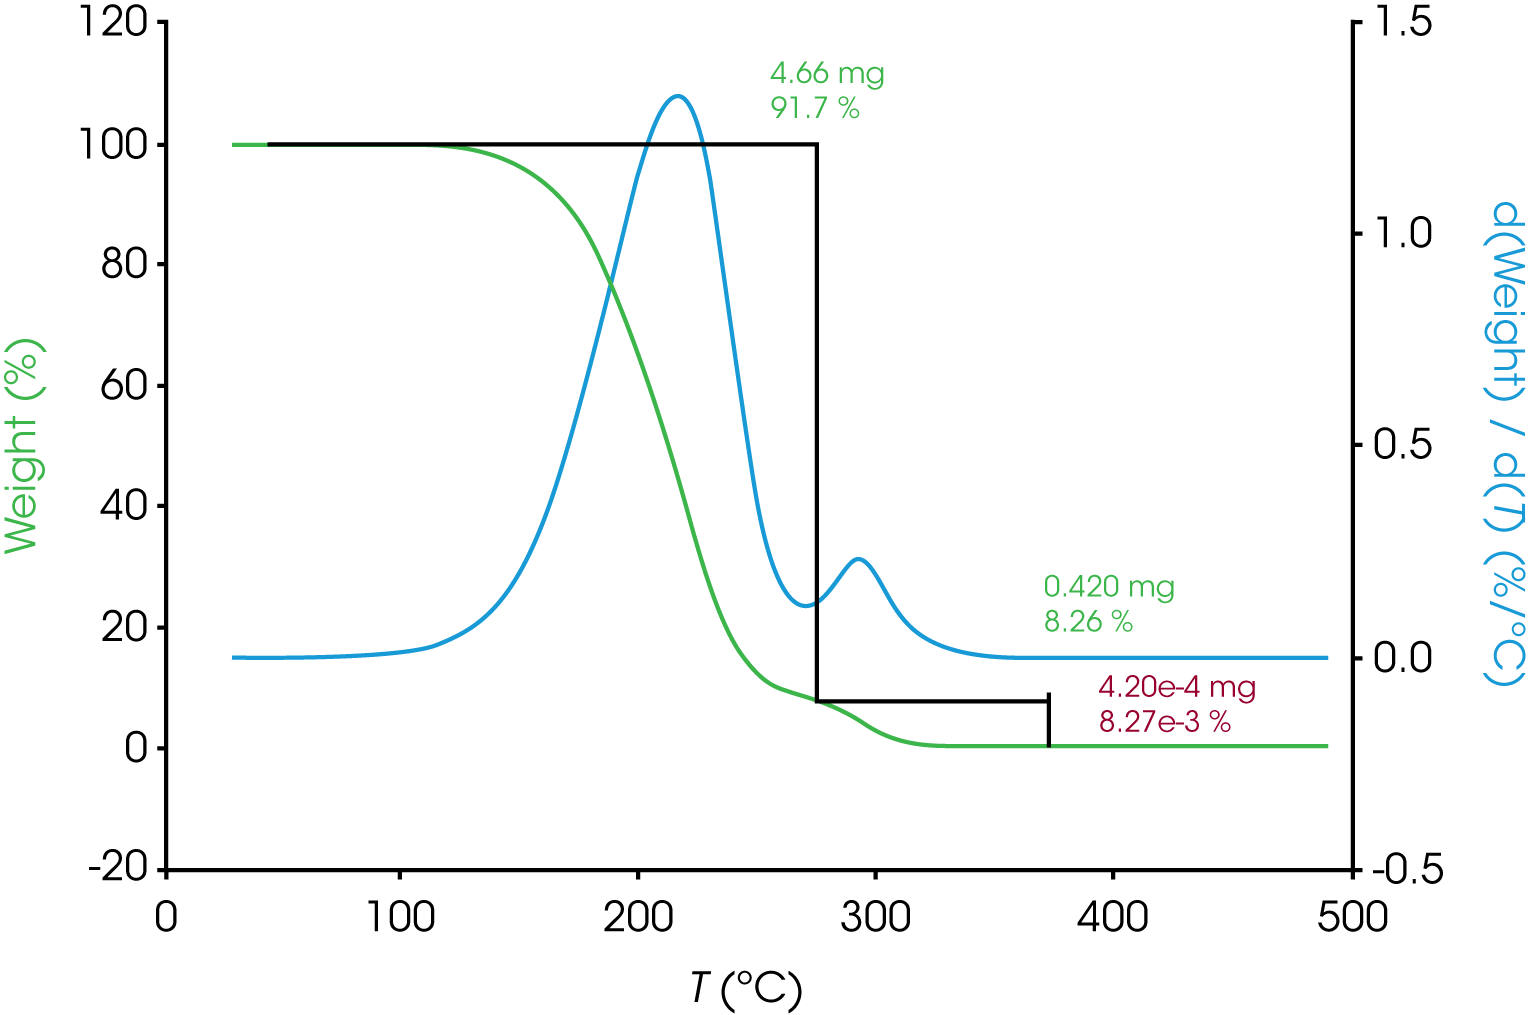 Figure 5. TGA Mass Loss Data for Oil ‘A’